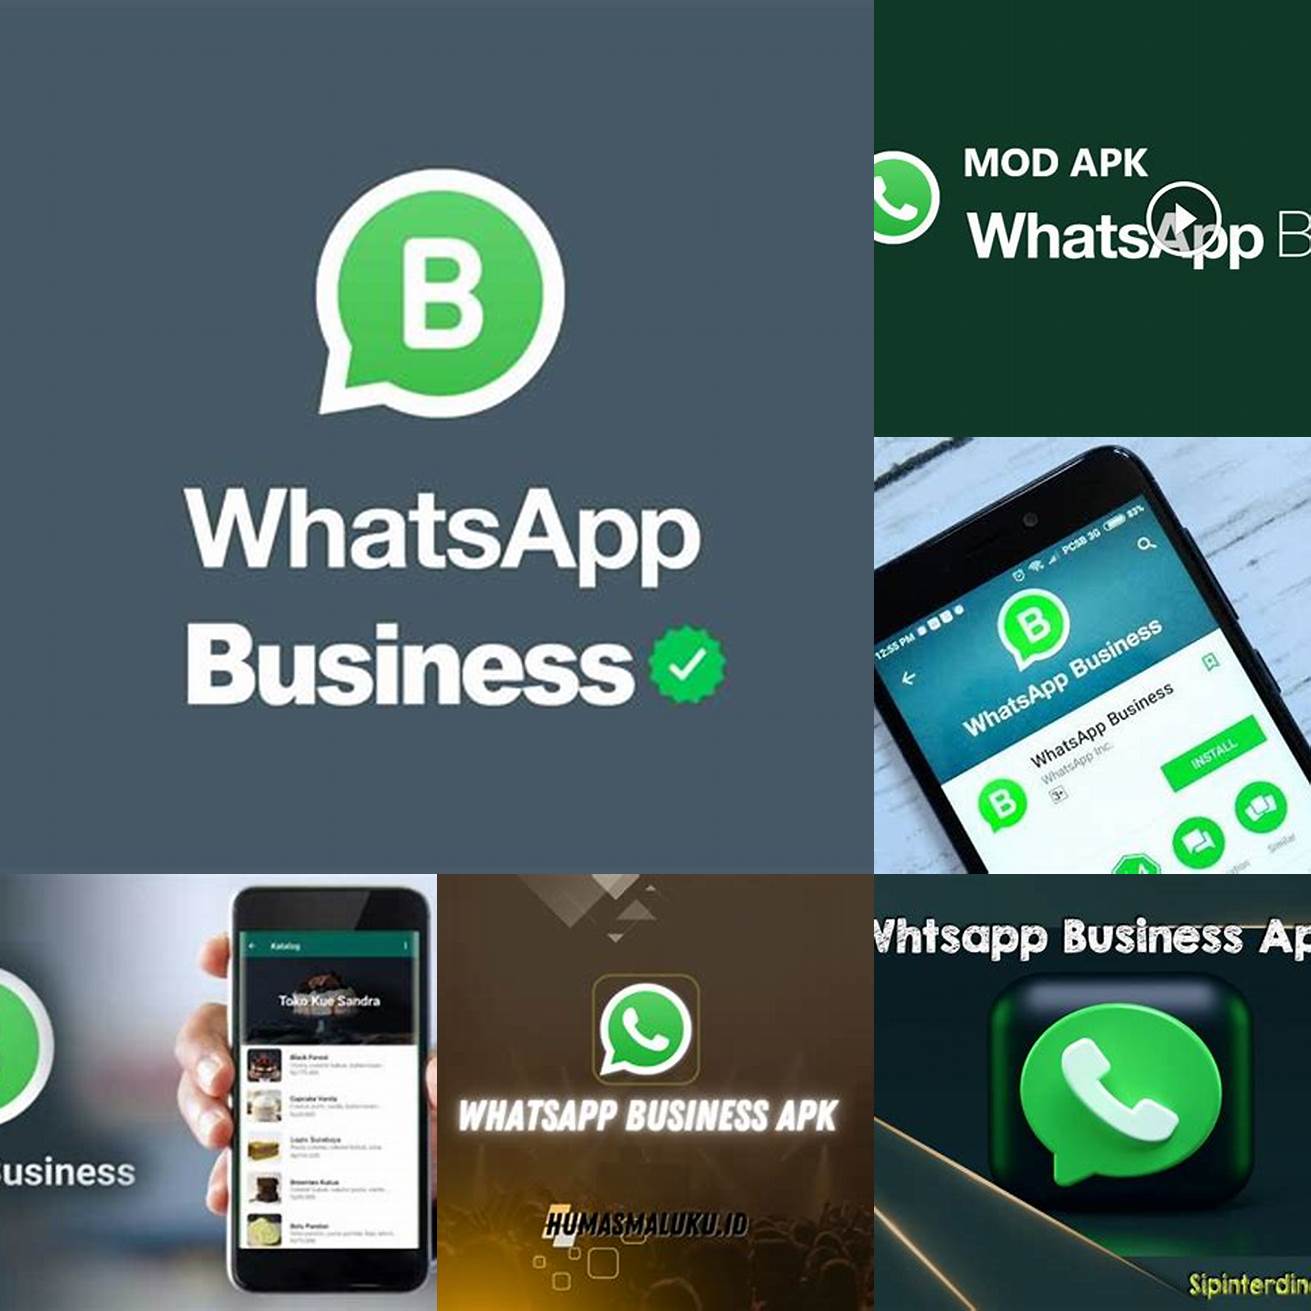 Buka WhatsApp Business Mod Apk dan mulai menggunakannya